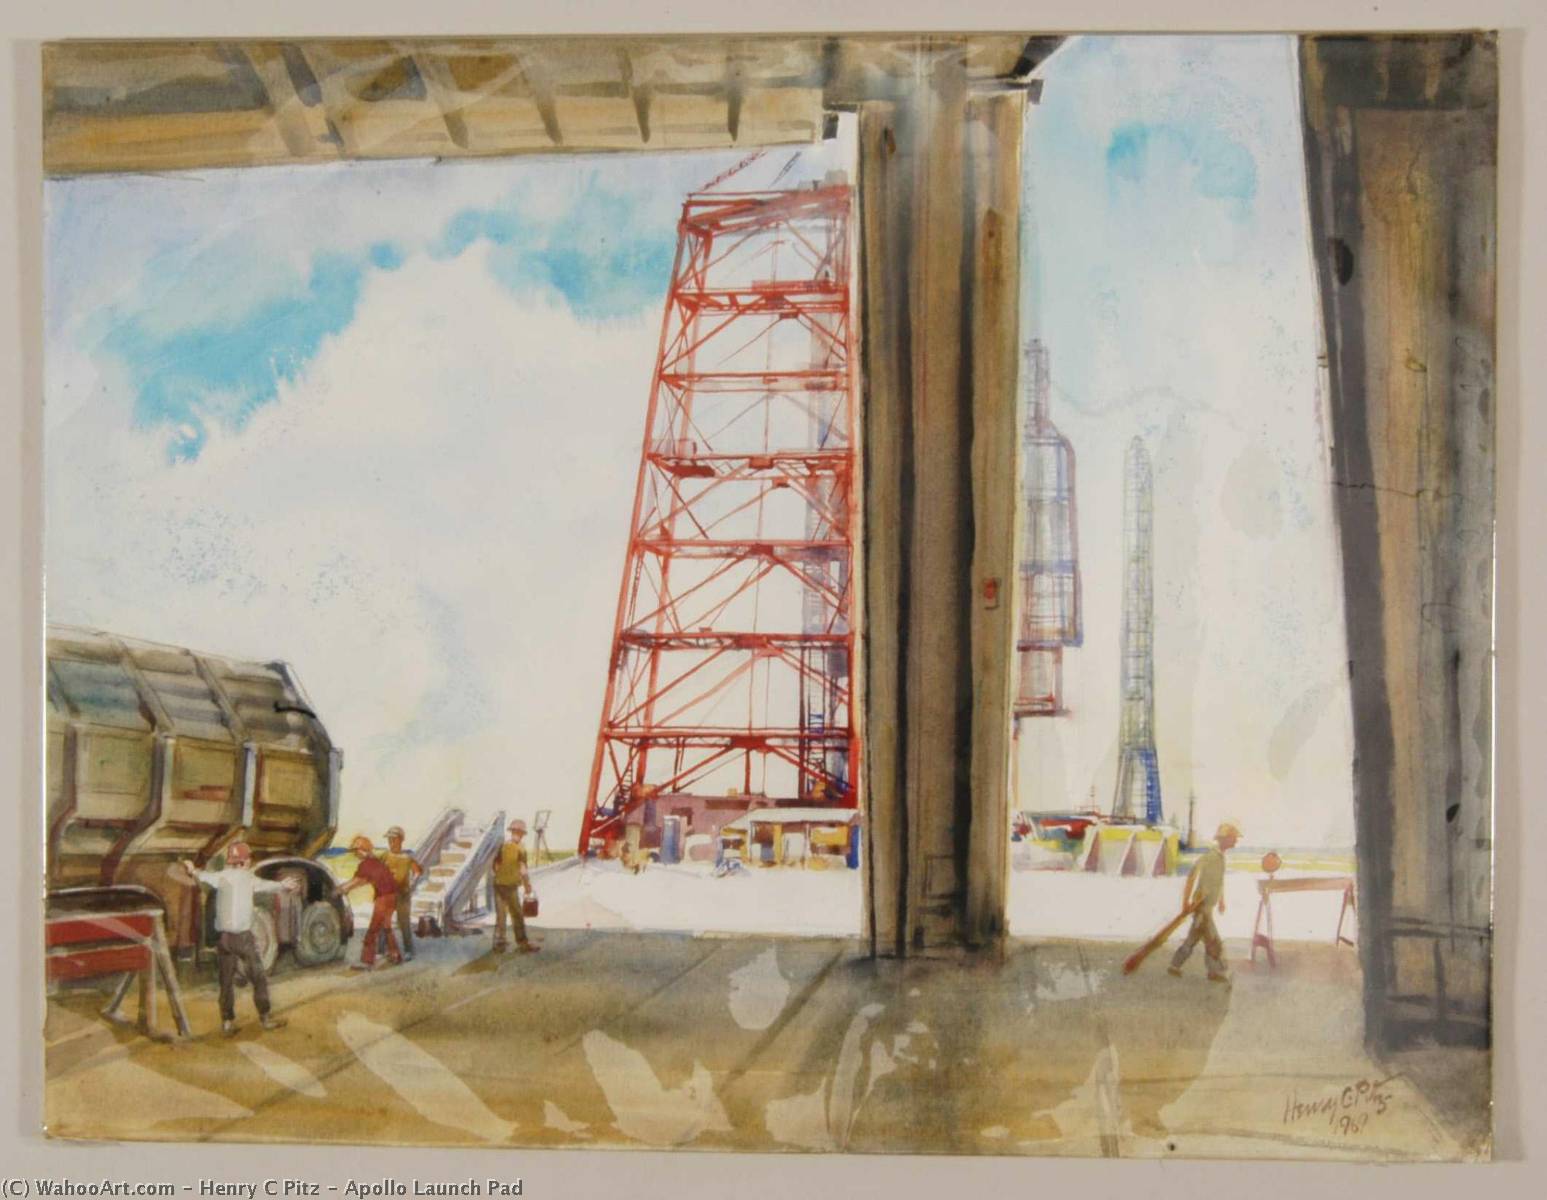 Apollo Launch Pad, 1969 by Henry C Pitz (1895-1976) Henry C Pitz | ArtsDot.com